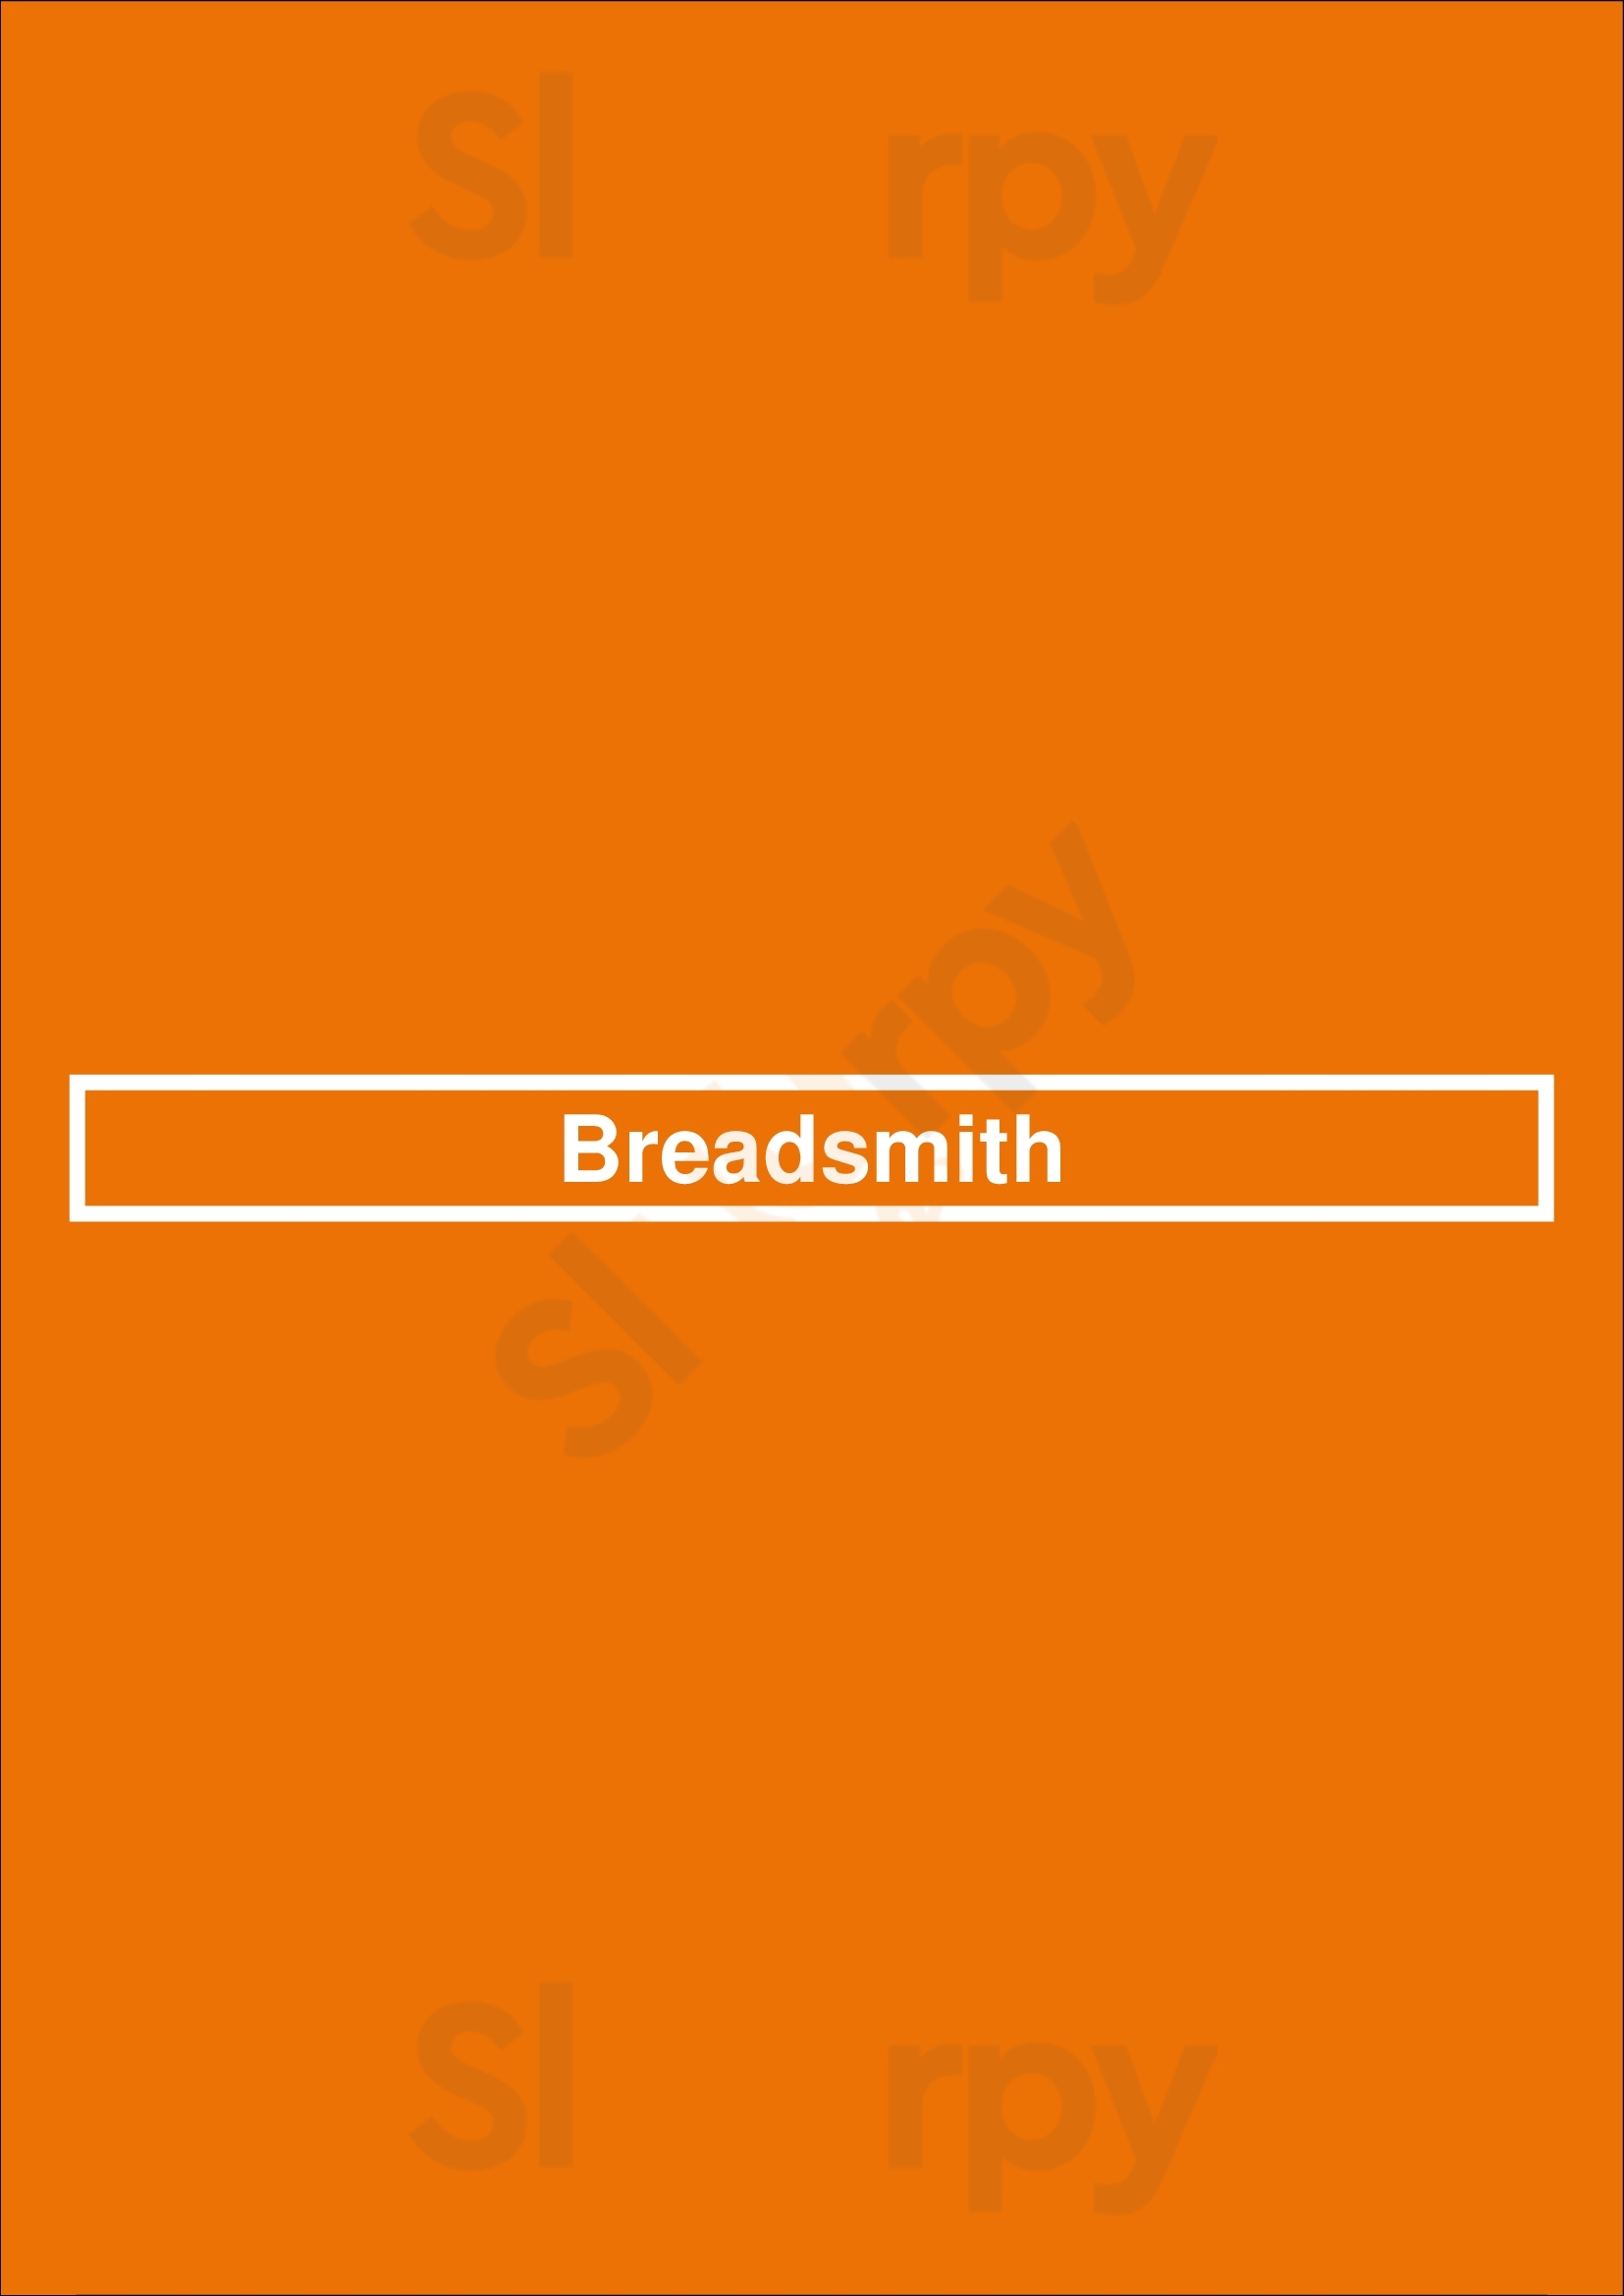 Breadsmith Milwaukee Menu - 1